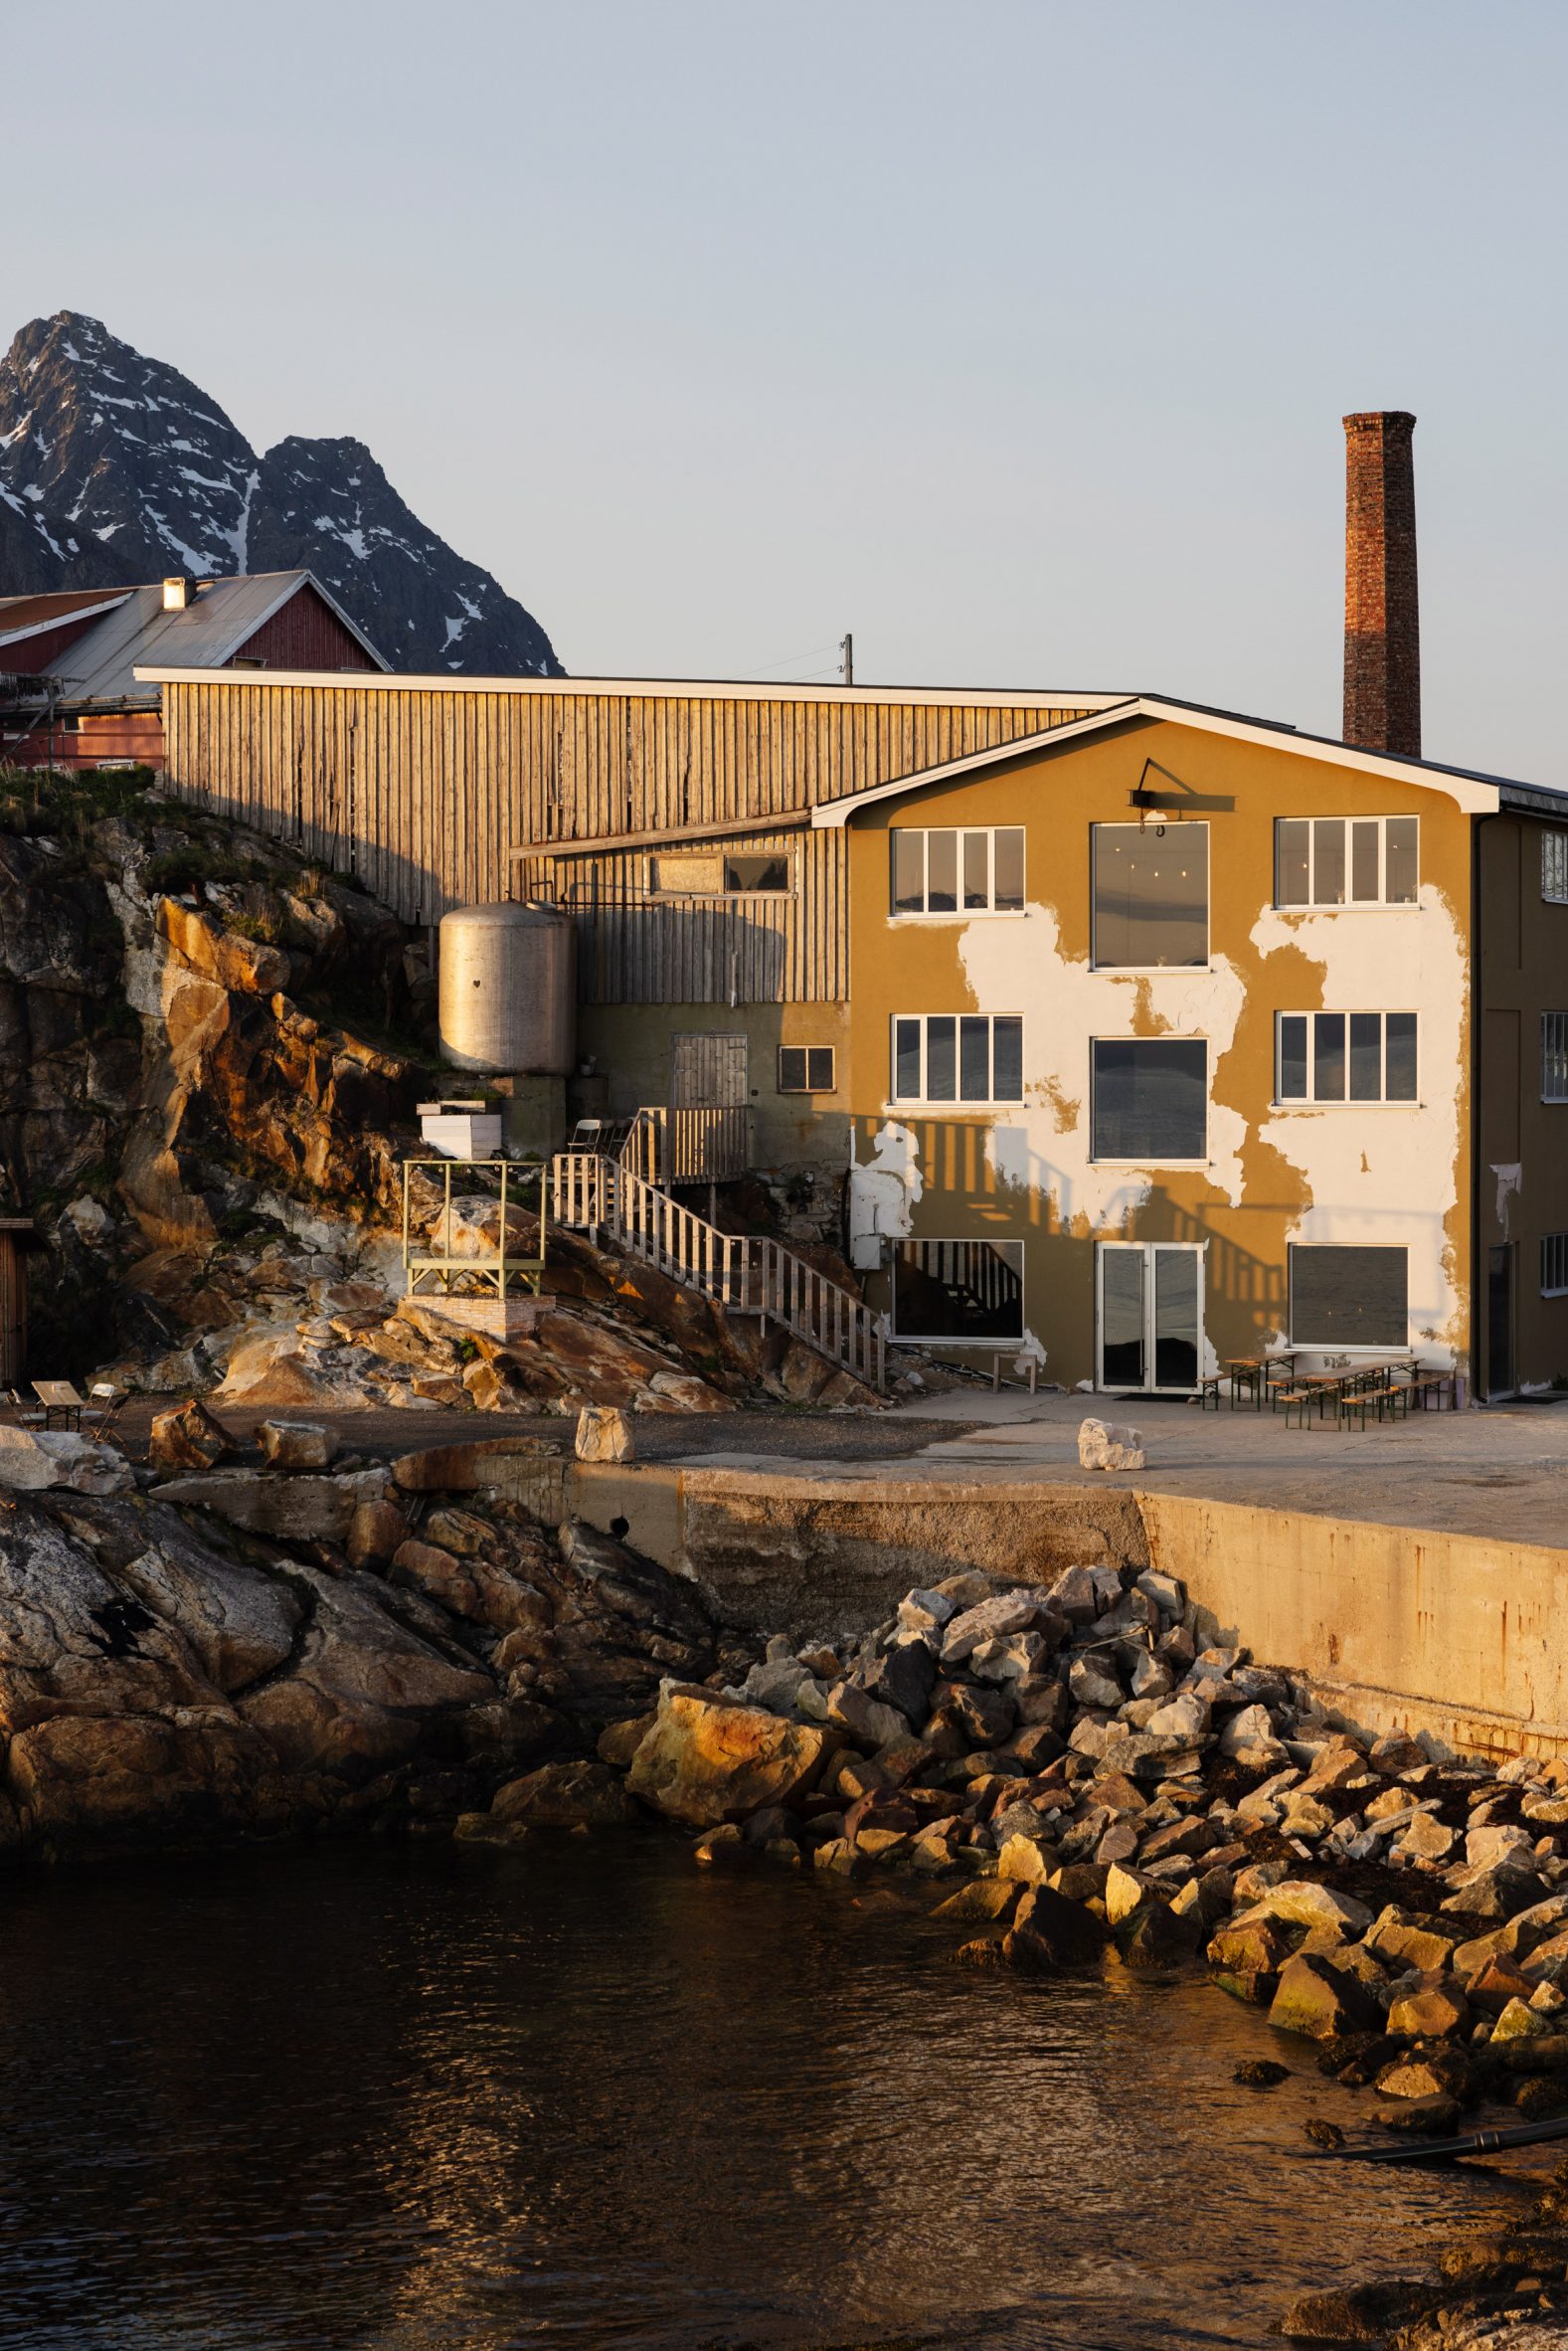 Trevarefabrikken hotel in Norway by Jonathan Tuckey Design